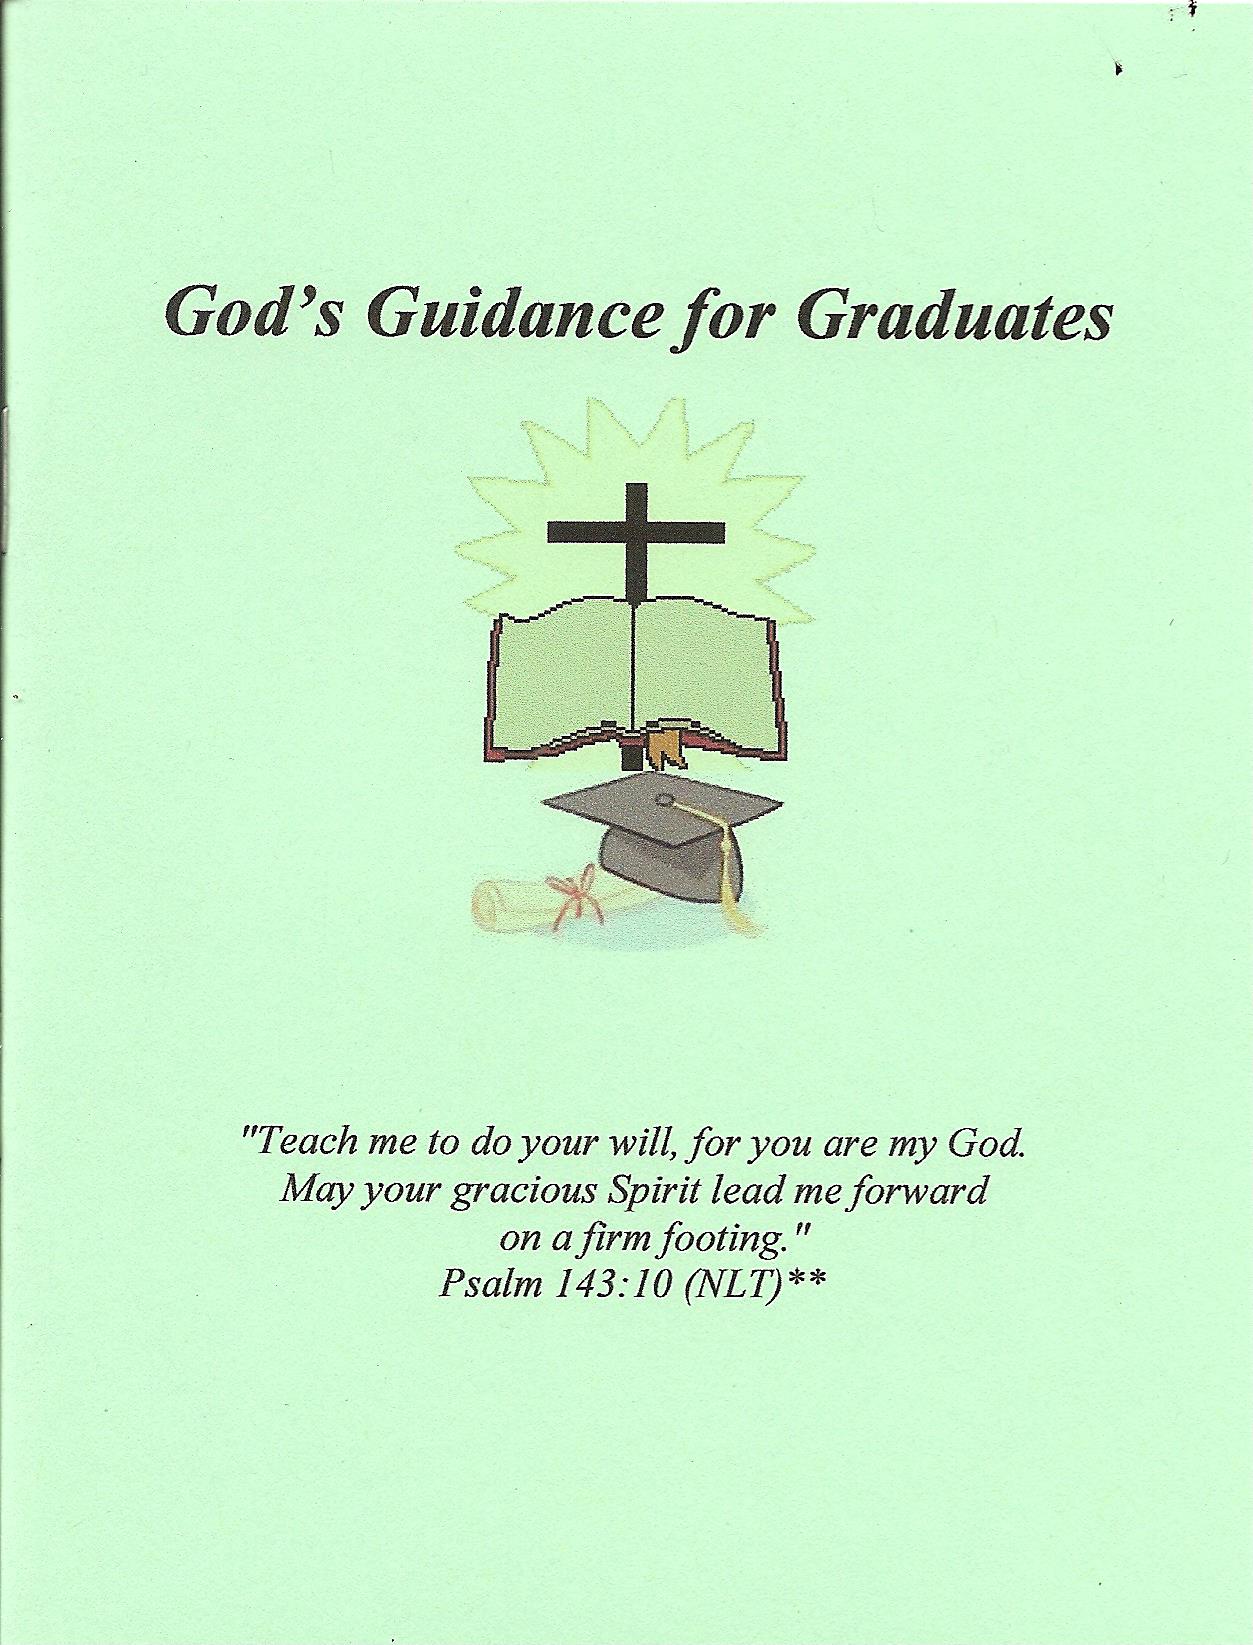 God's guidance for graduates